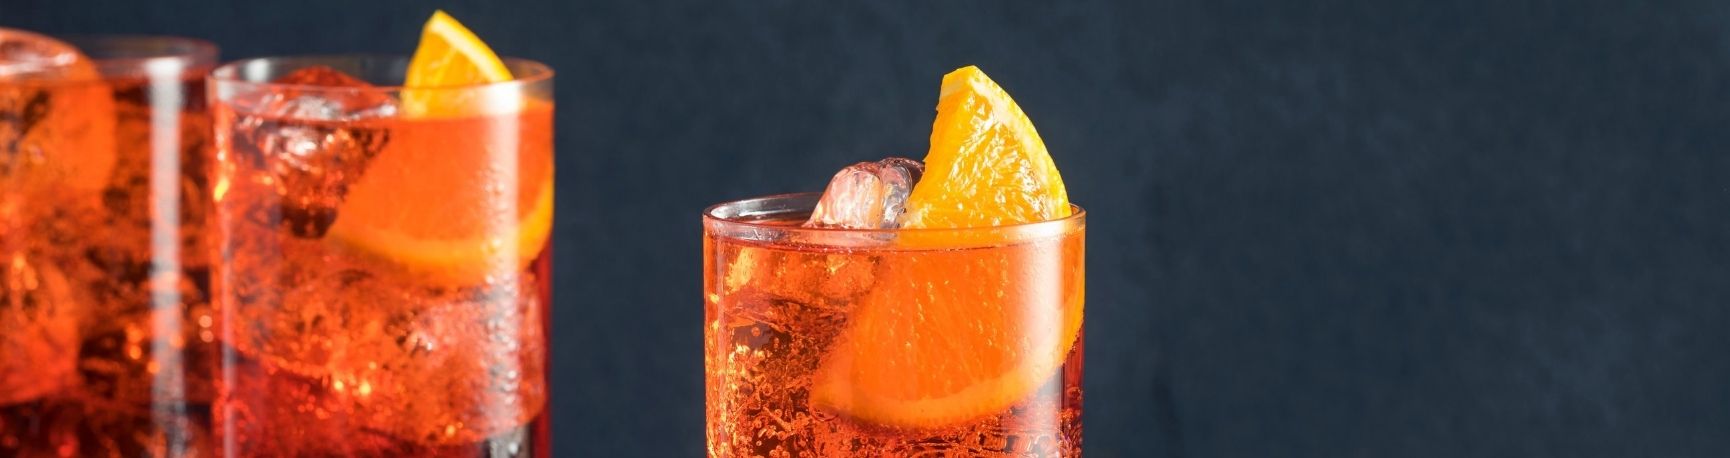 3 Cocktails Americano avec de l'orange